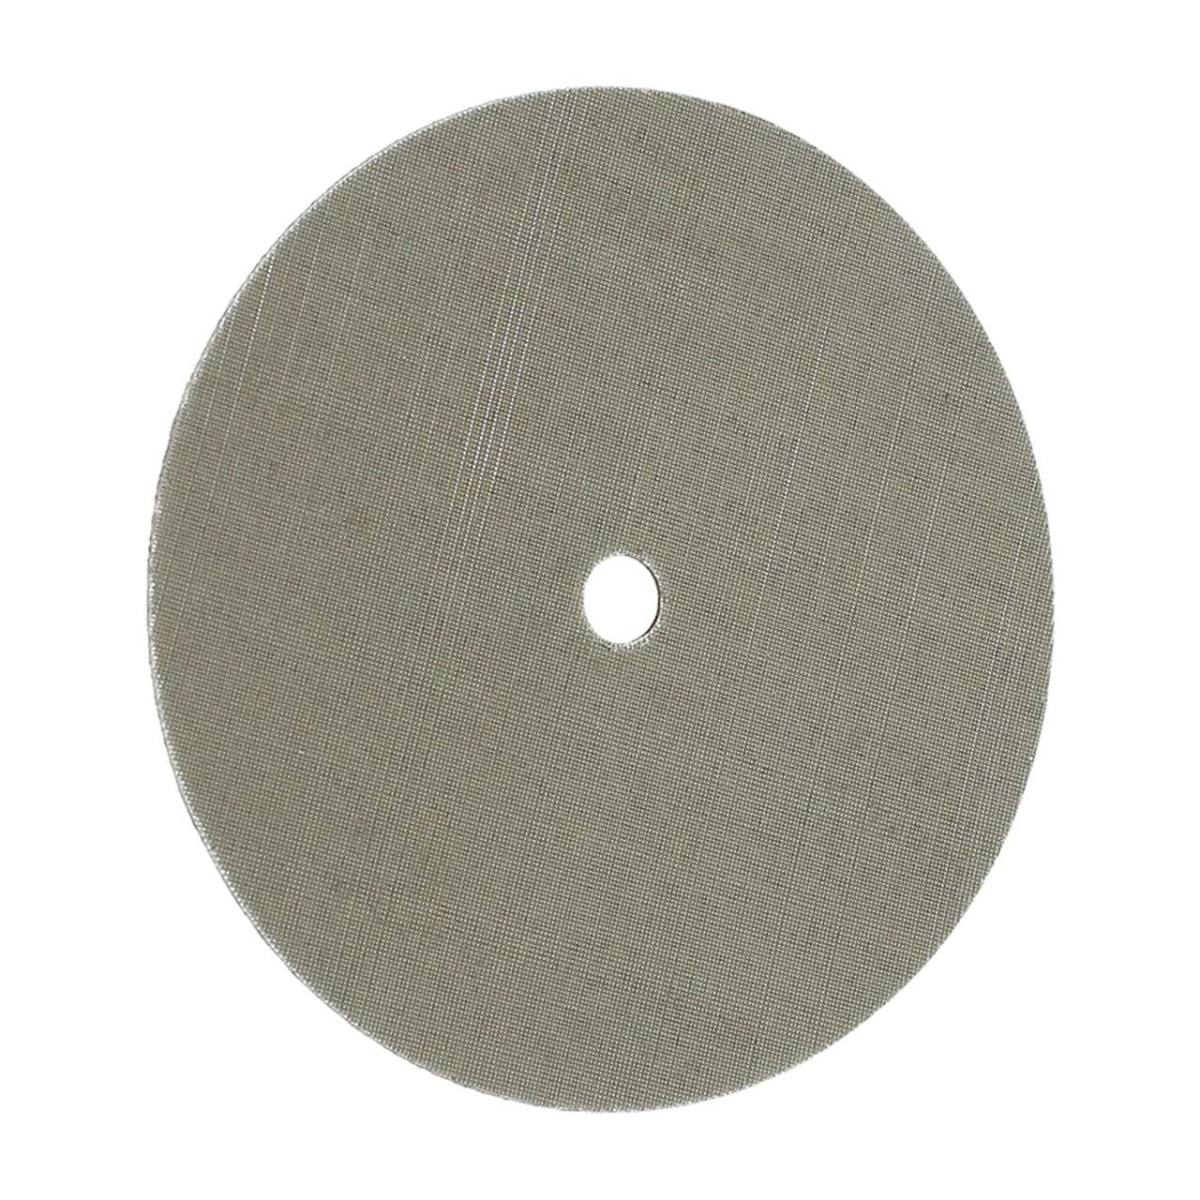 FIX KLETT Trizact disc, 115 mm x 10 mm, grain 1,200 / A 16, hook-and-loop fastener